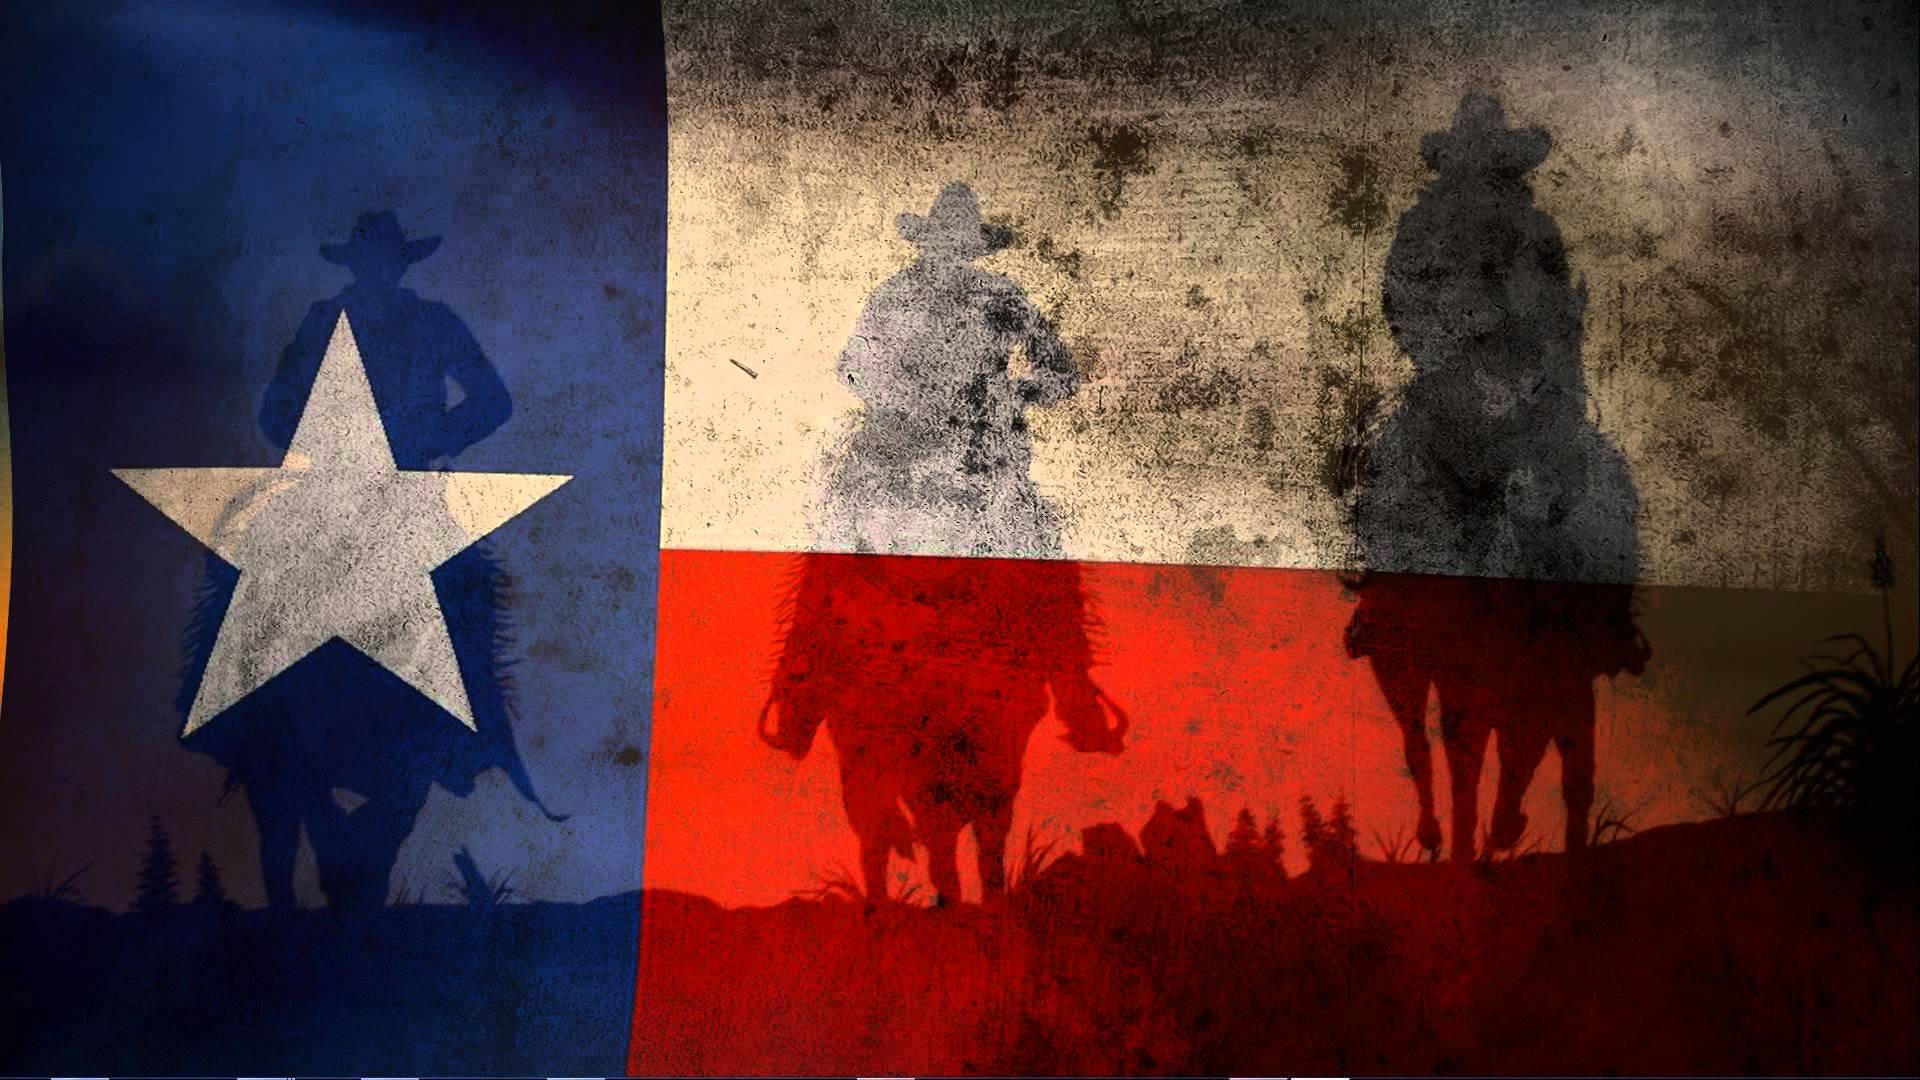 Texas flag & Yellow Rose of Texas/Eyes of Texas by Elvis Presley